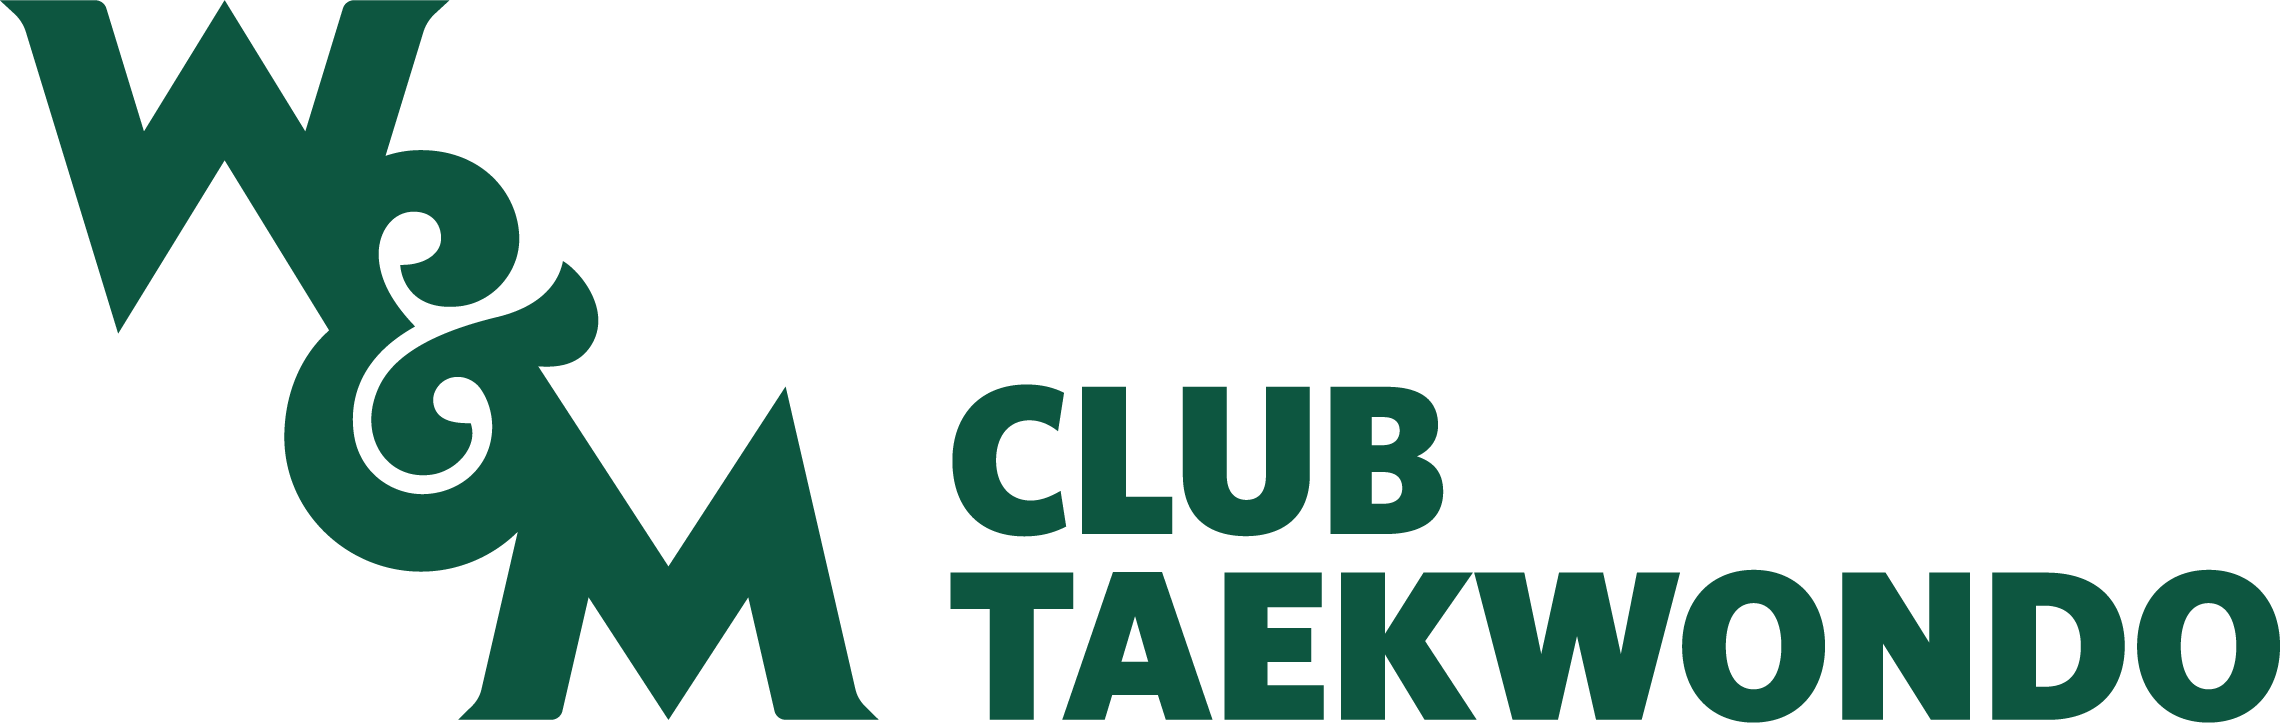 Taekwondo Club Logo